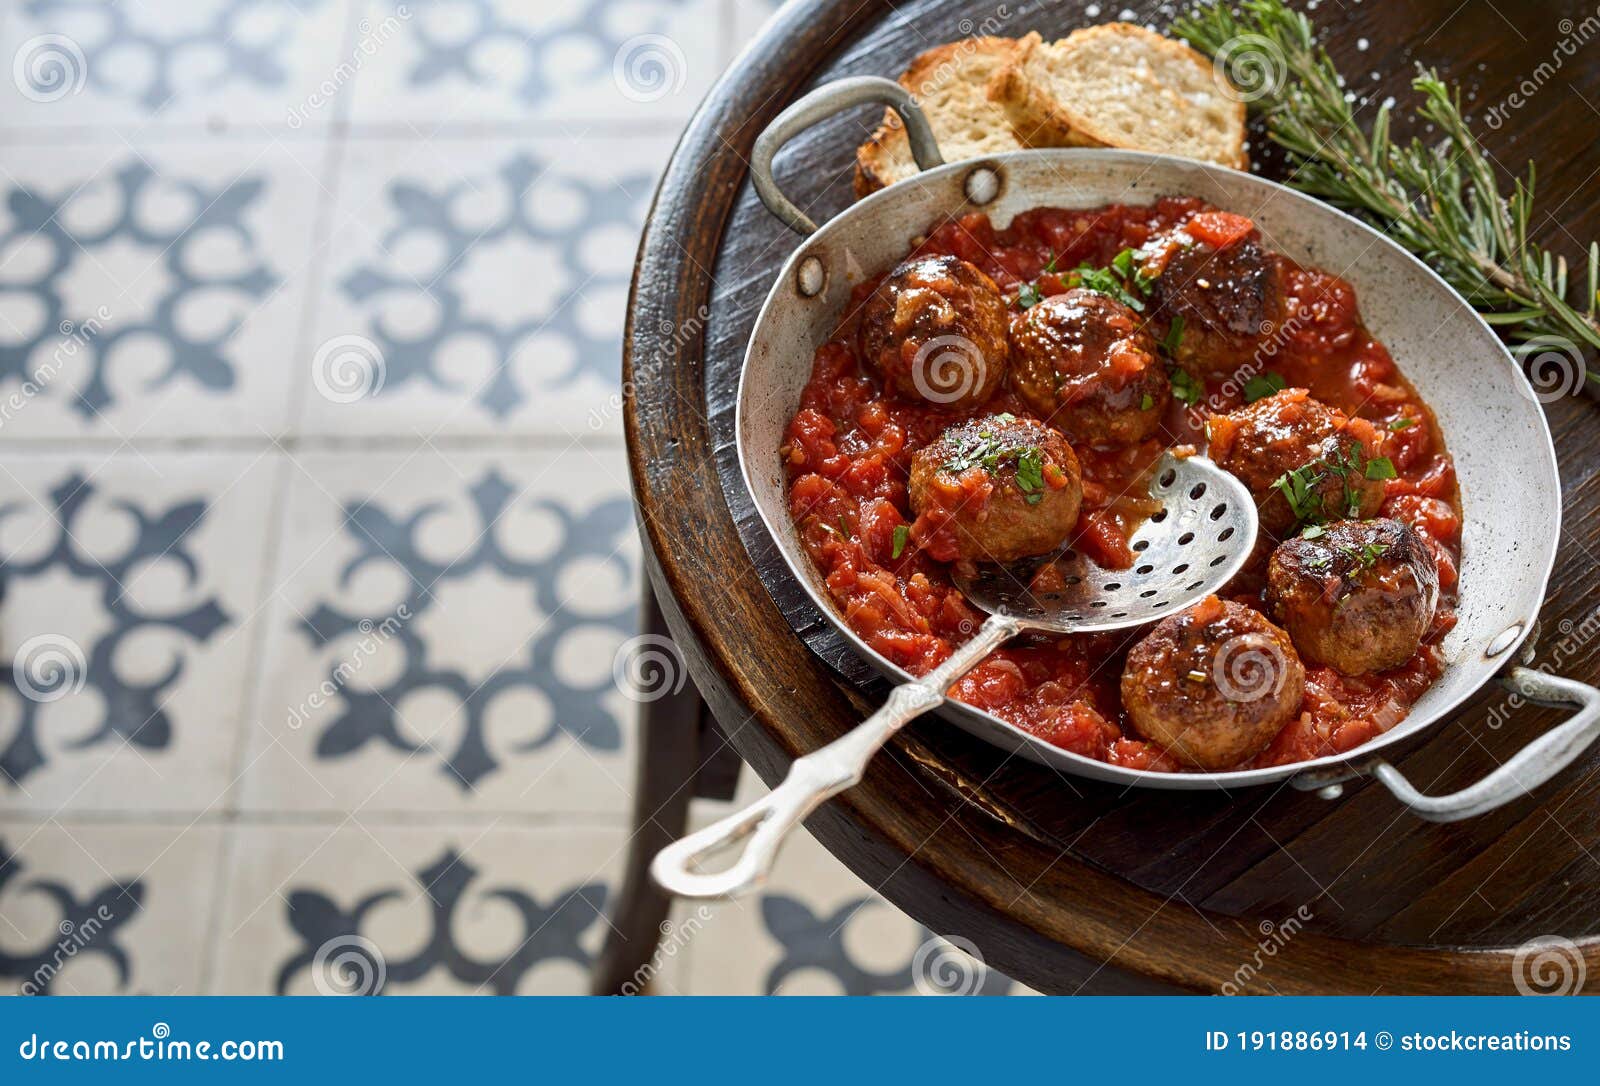 vintage metal dish of spicy spanish meatballs